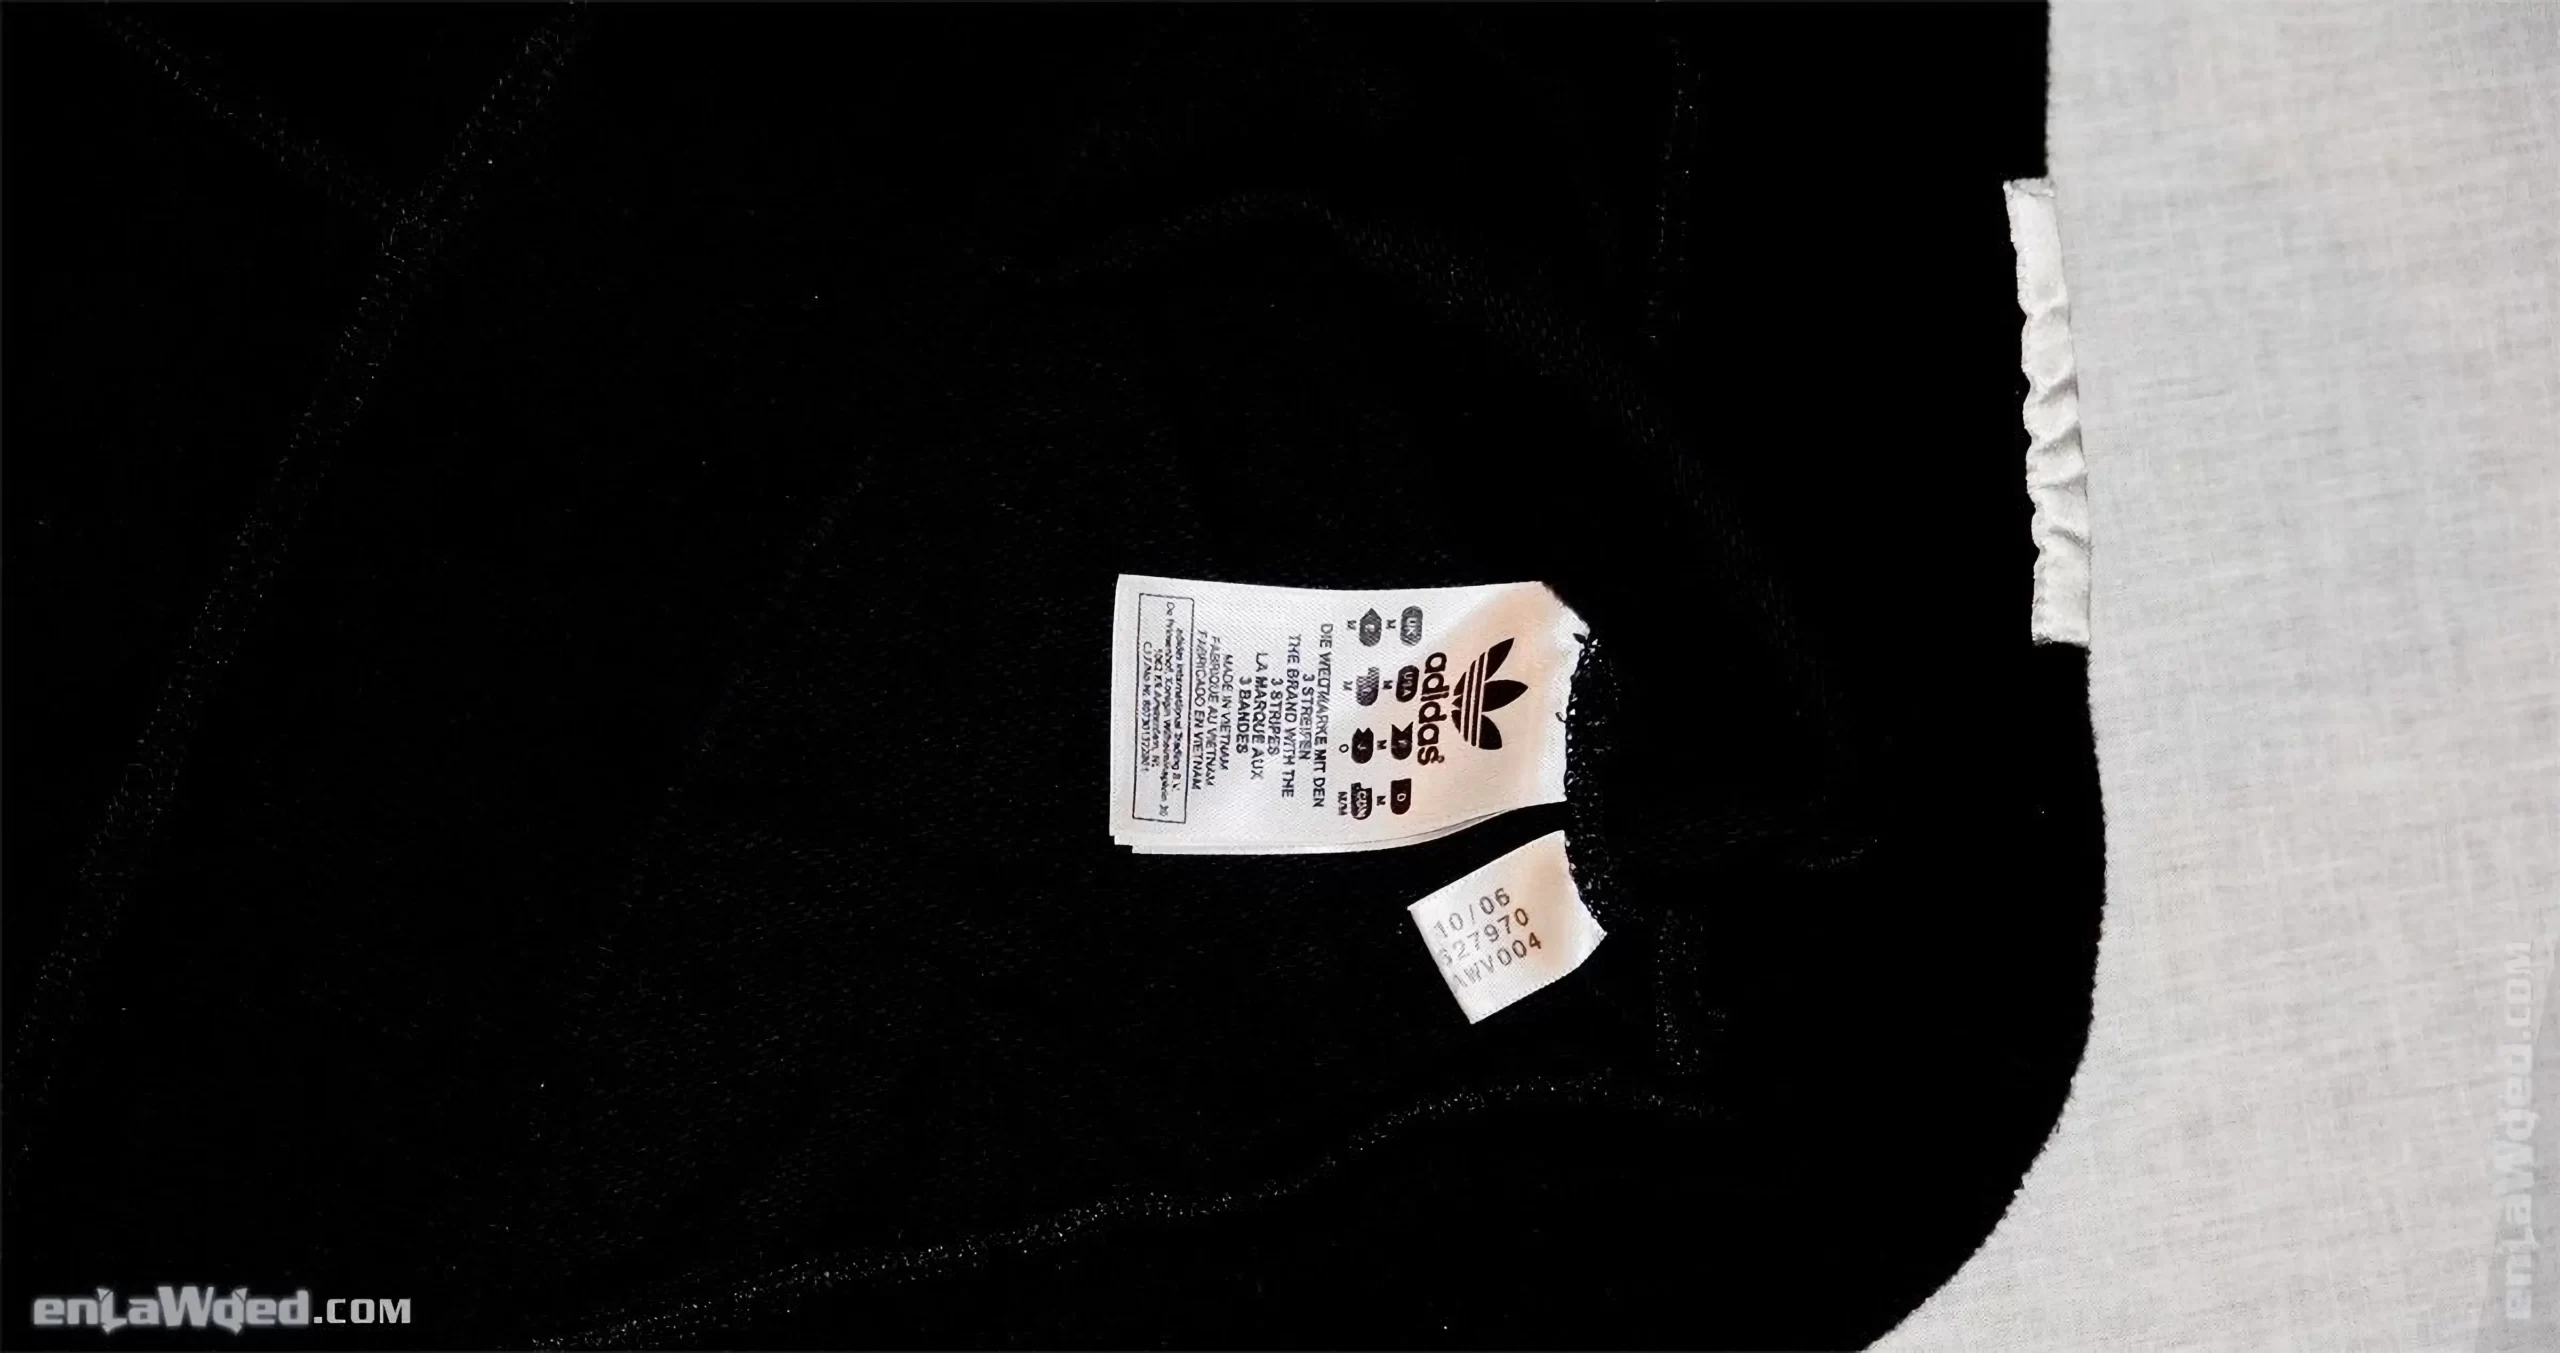 Men’s 2006 James Hunt Player’s Sweatshirt by Adidas: Spunky (EnLawded.com file #lmchk90309ip2y125014kg9st)